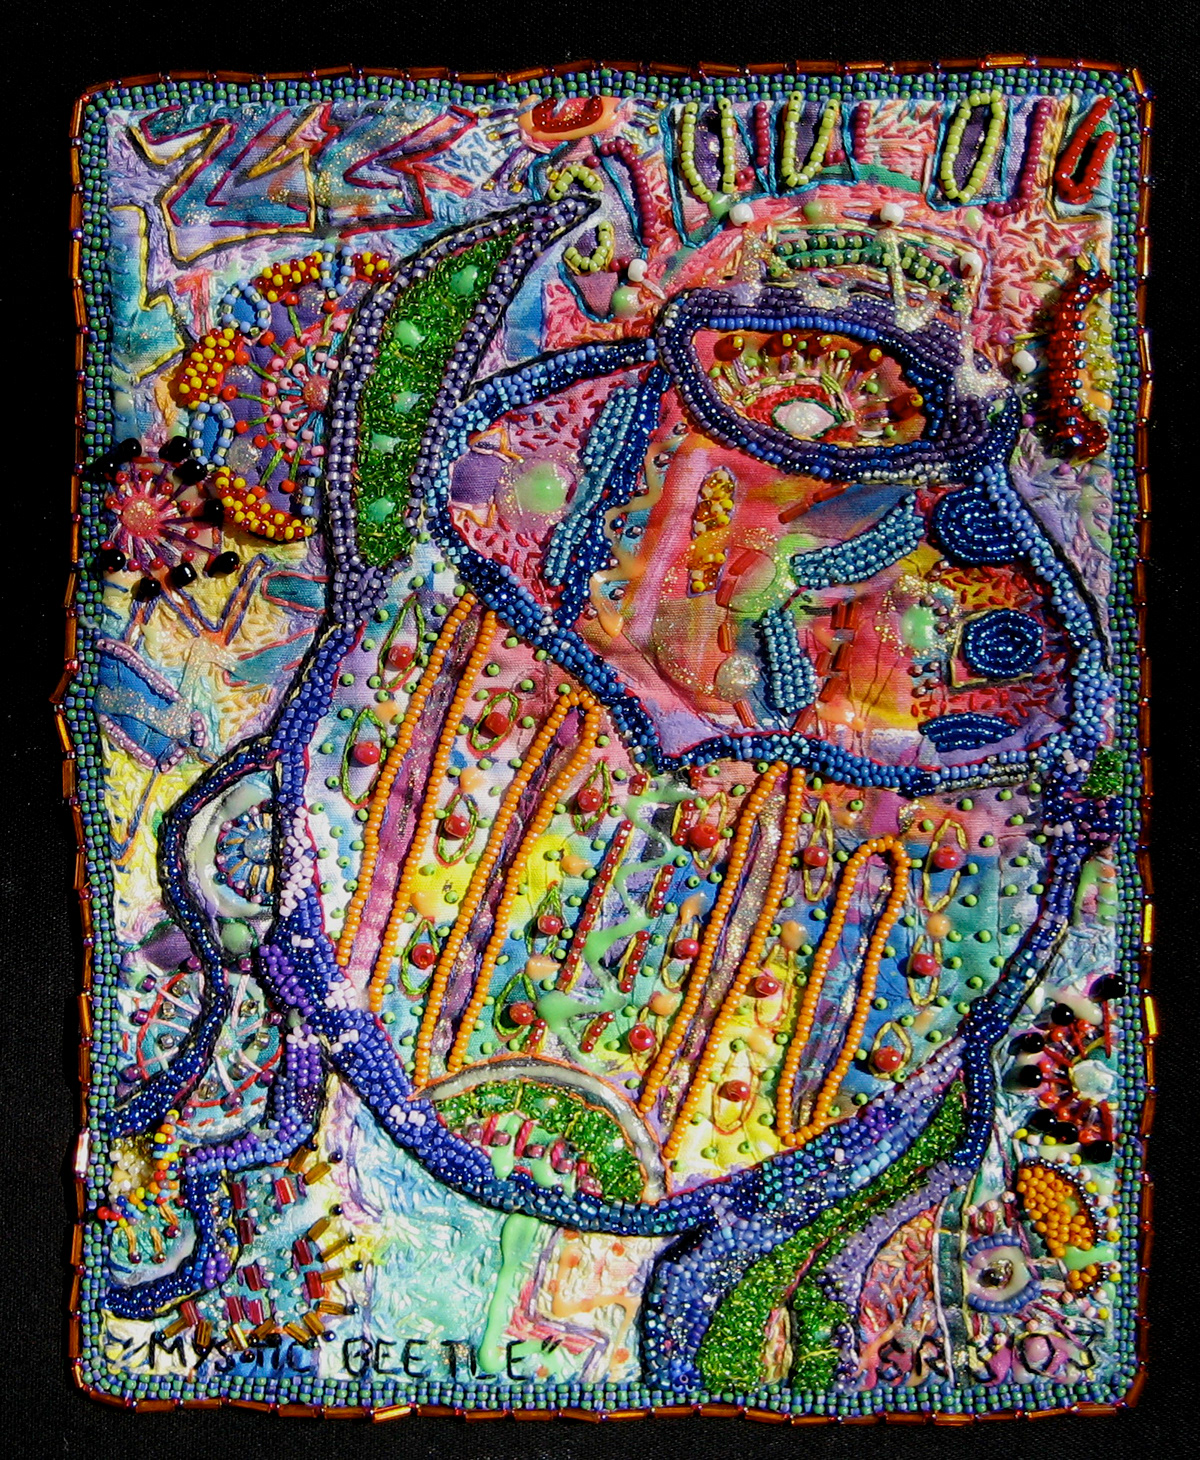 Embroidery  painting  textiles  fiber art mixed media beading